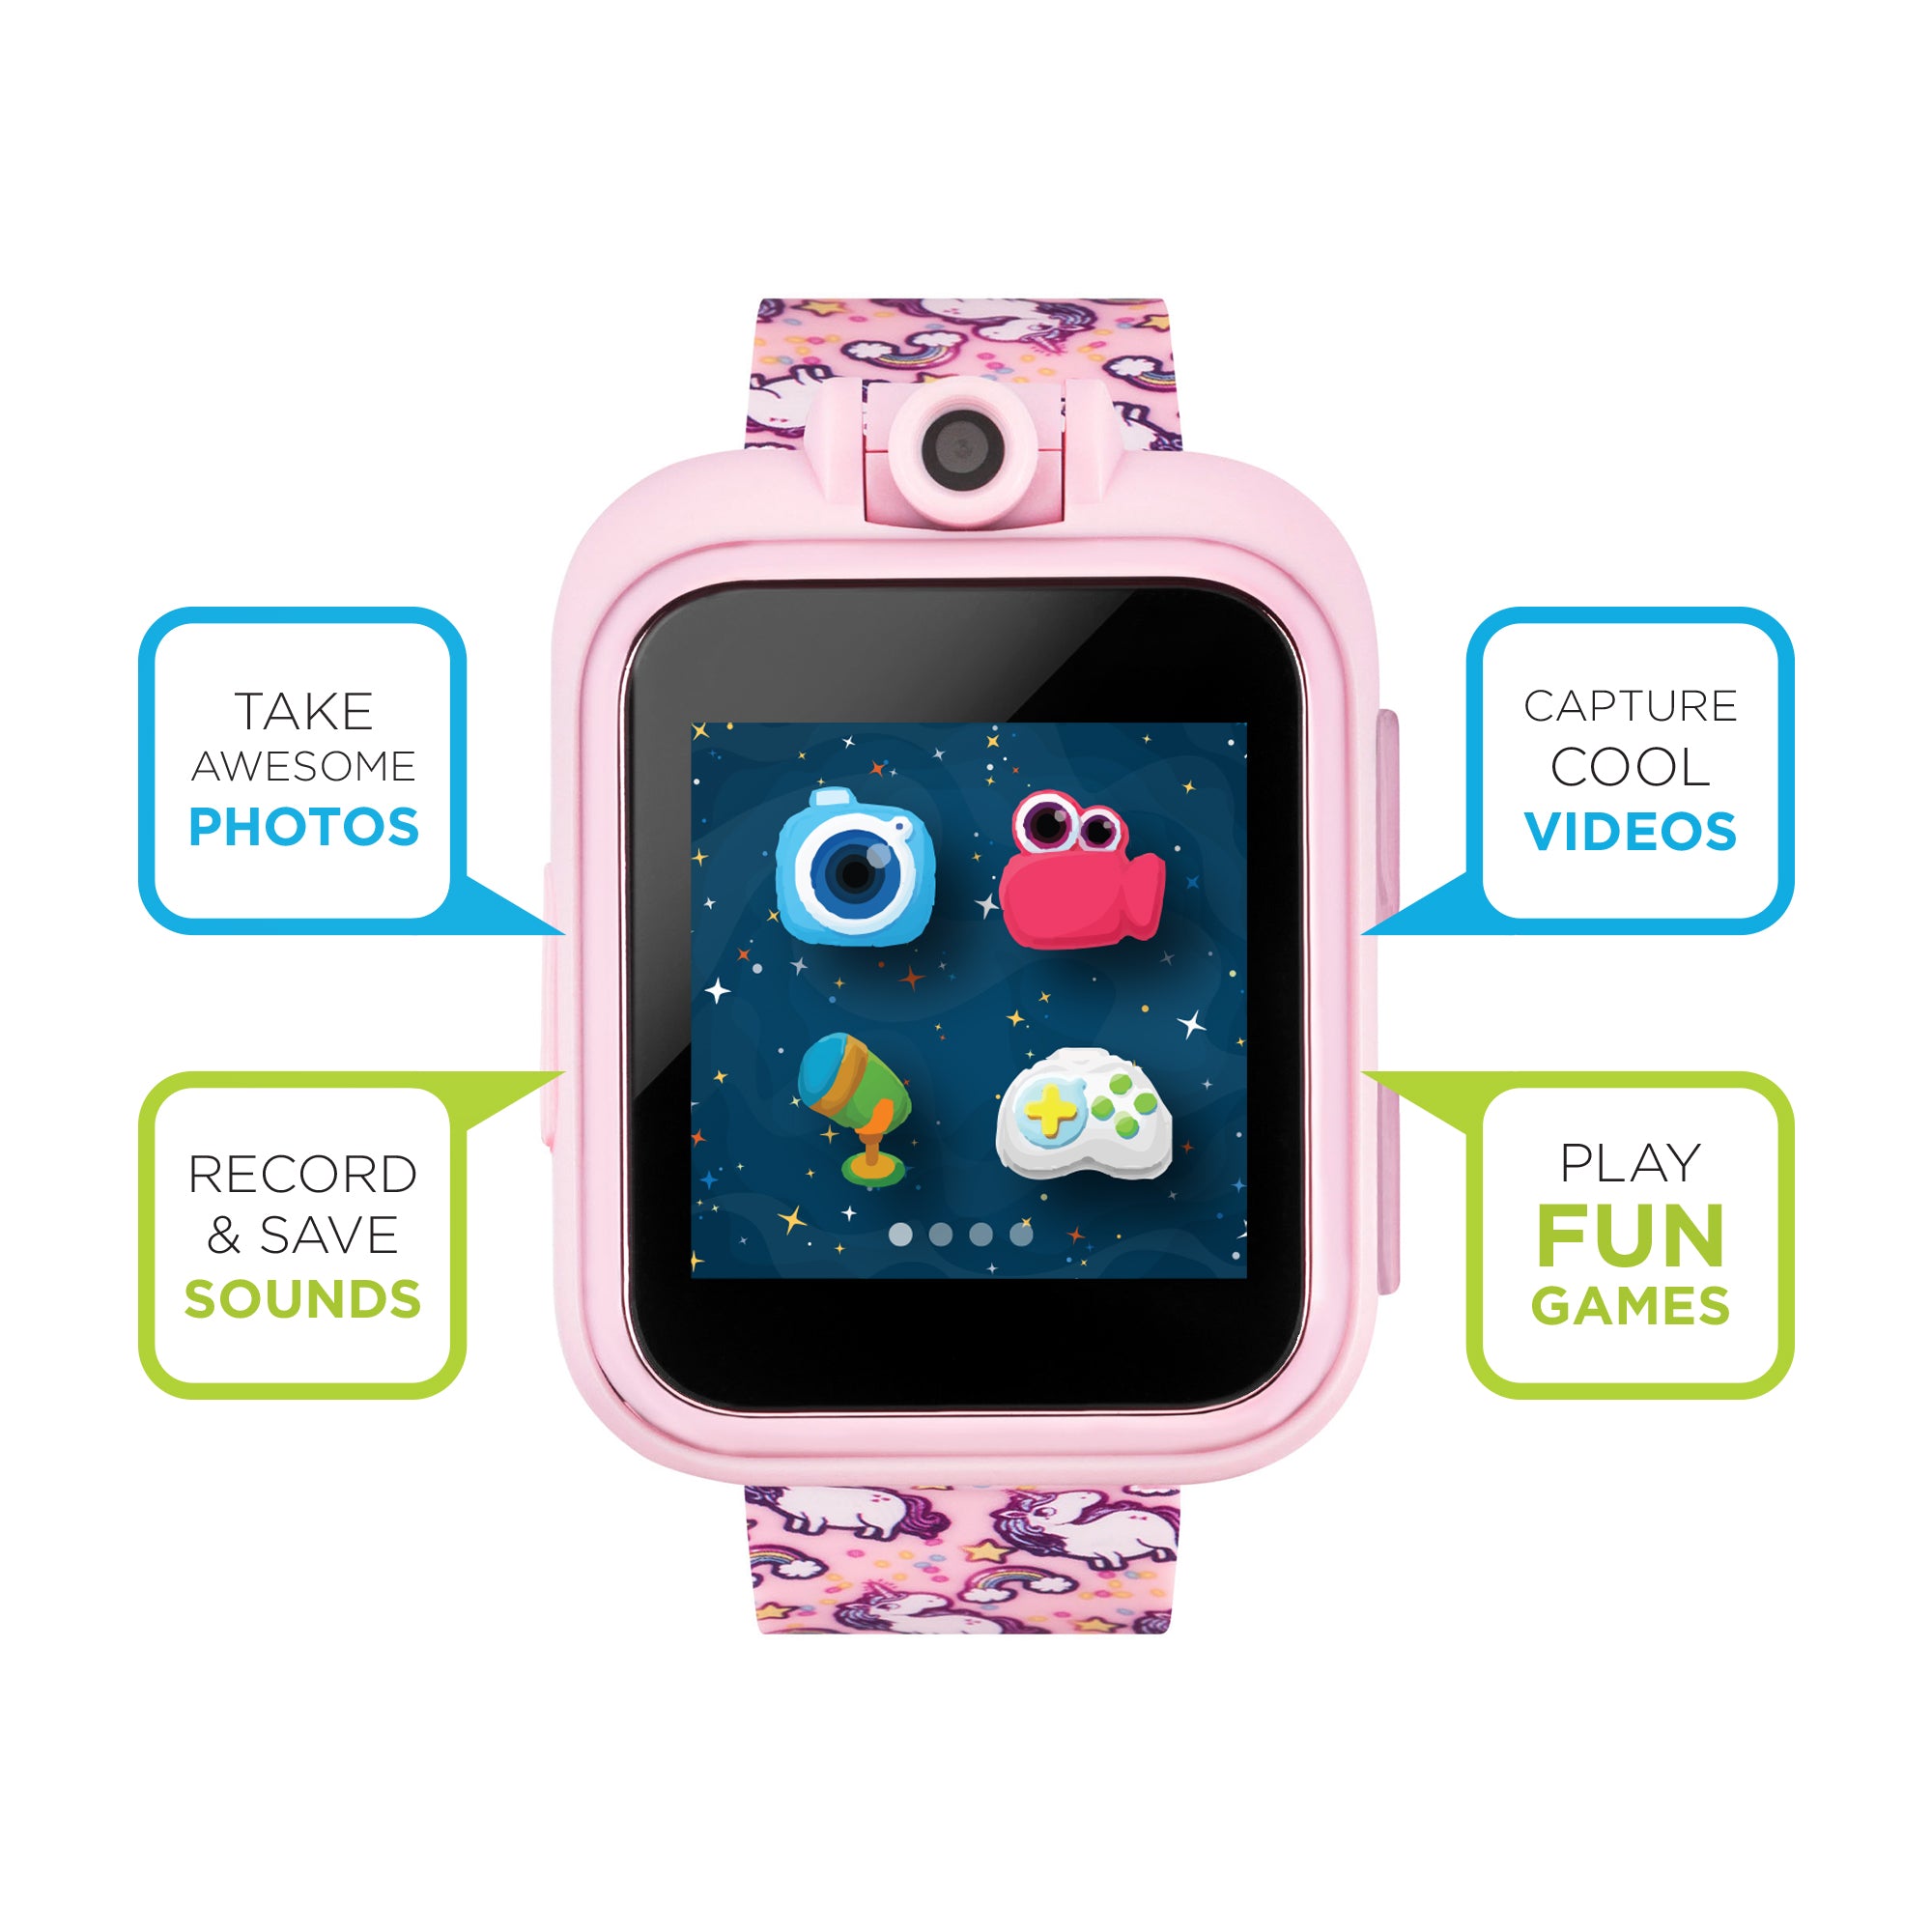 PlayZoom Smartwatch for Kids: Blush Unicorn affordable smart watch